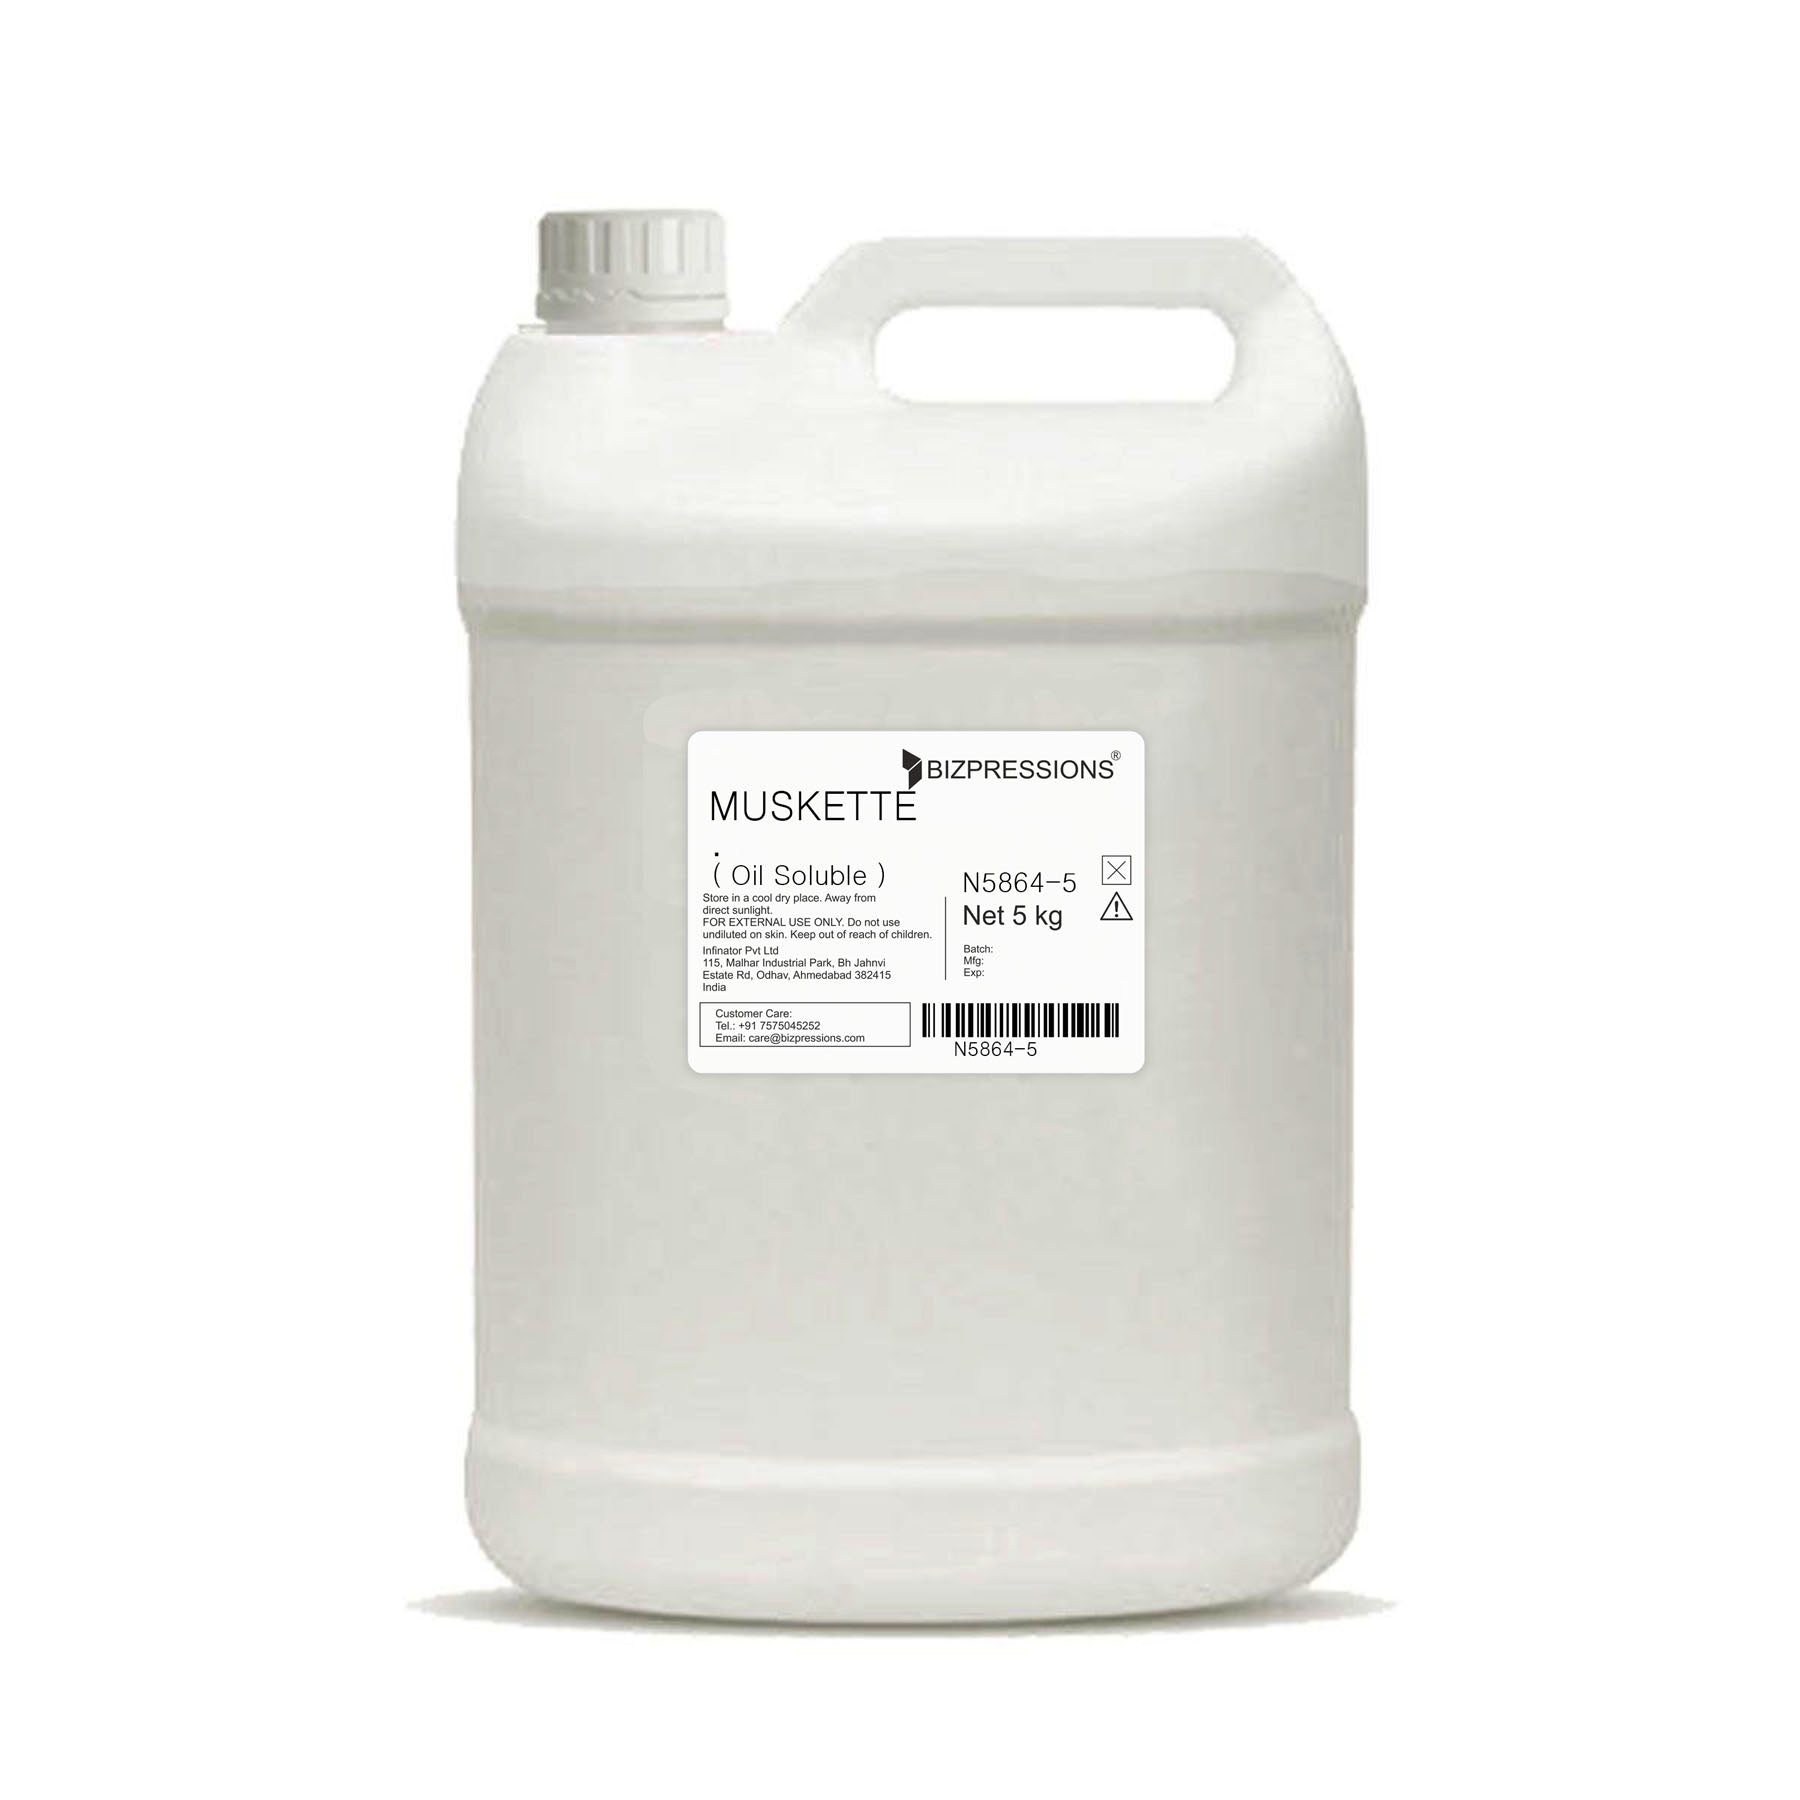 MUSKETTE - Fragrance ( Oil Soluble ) - 5 kg